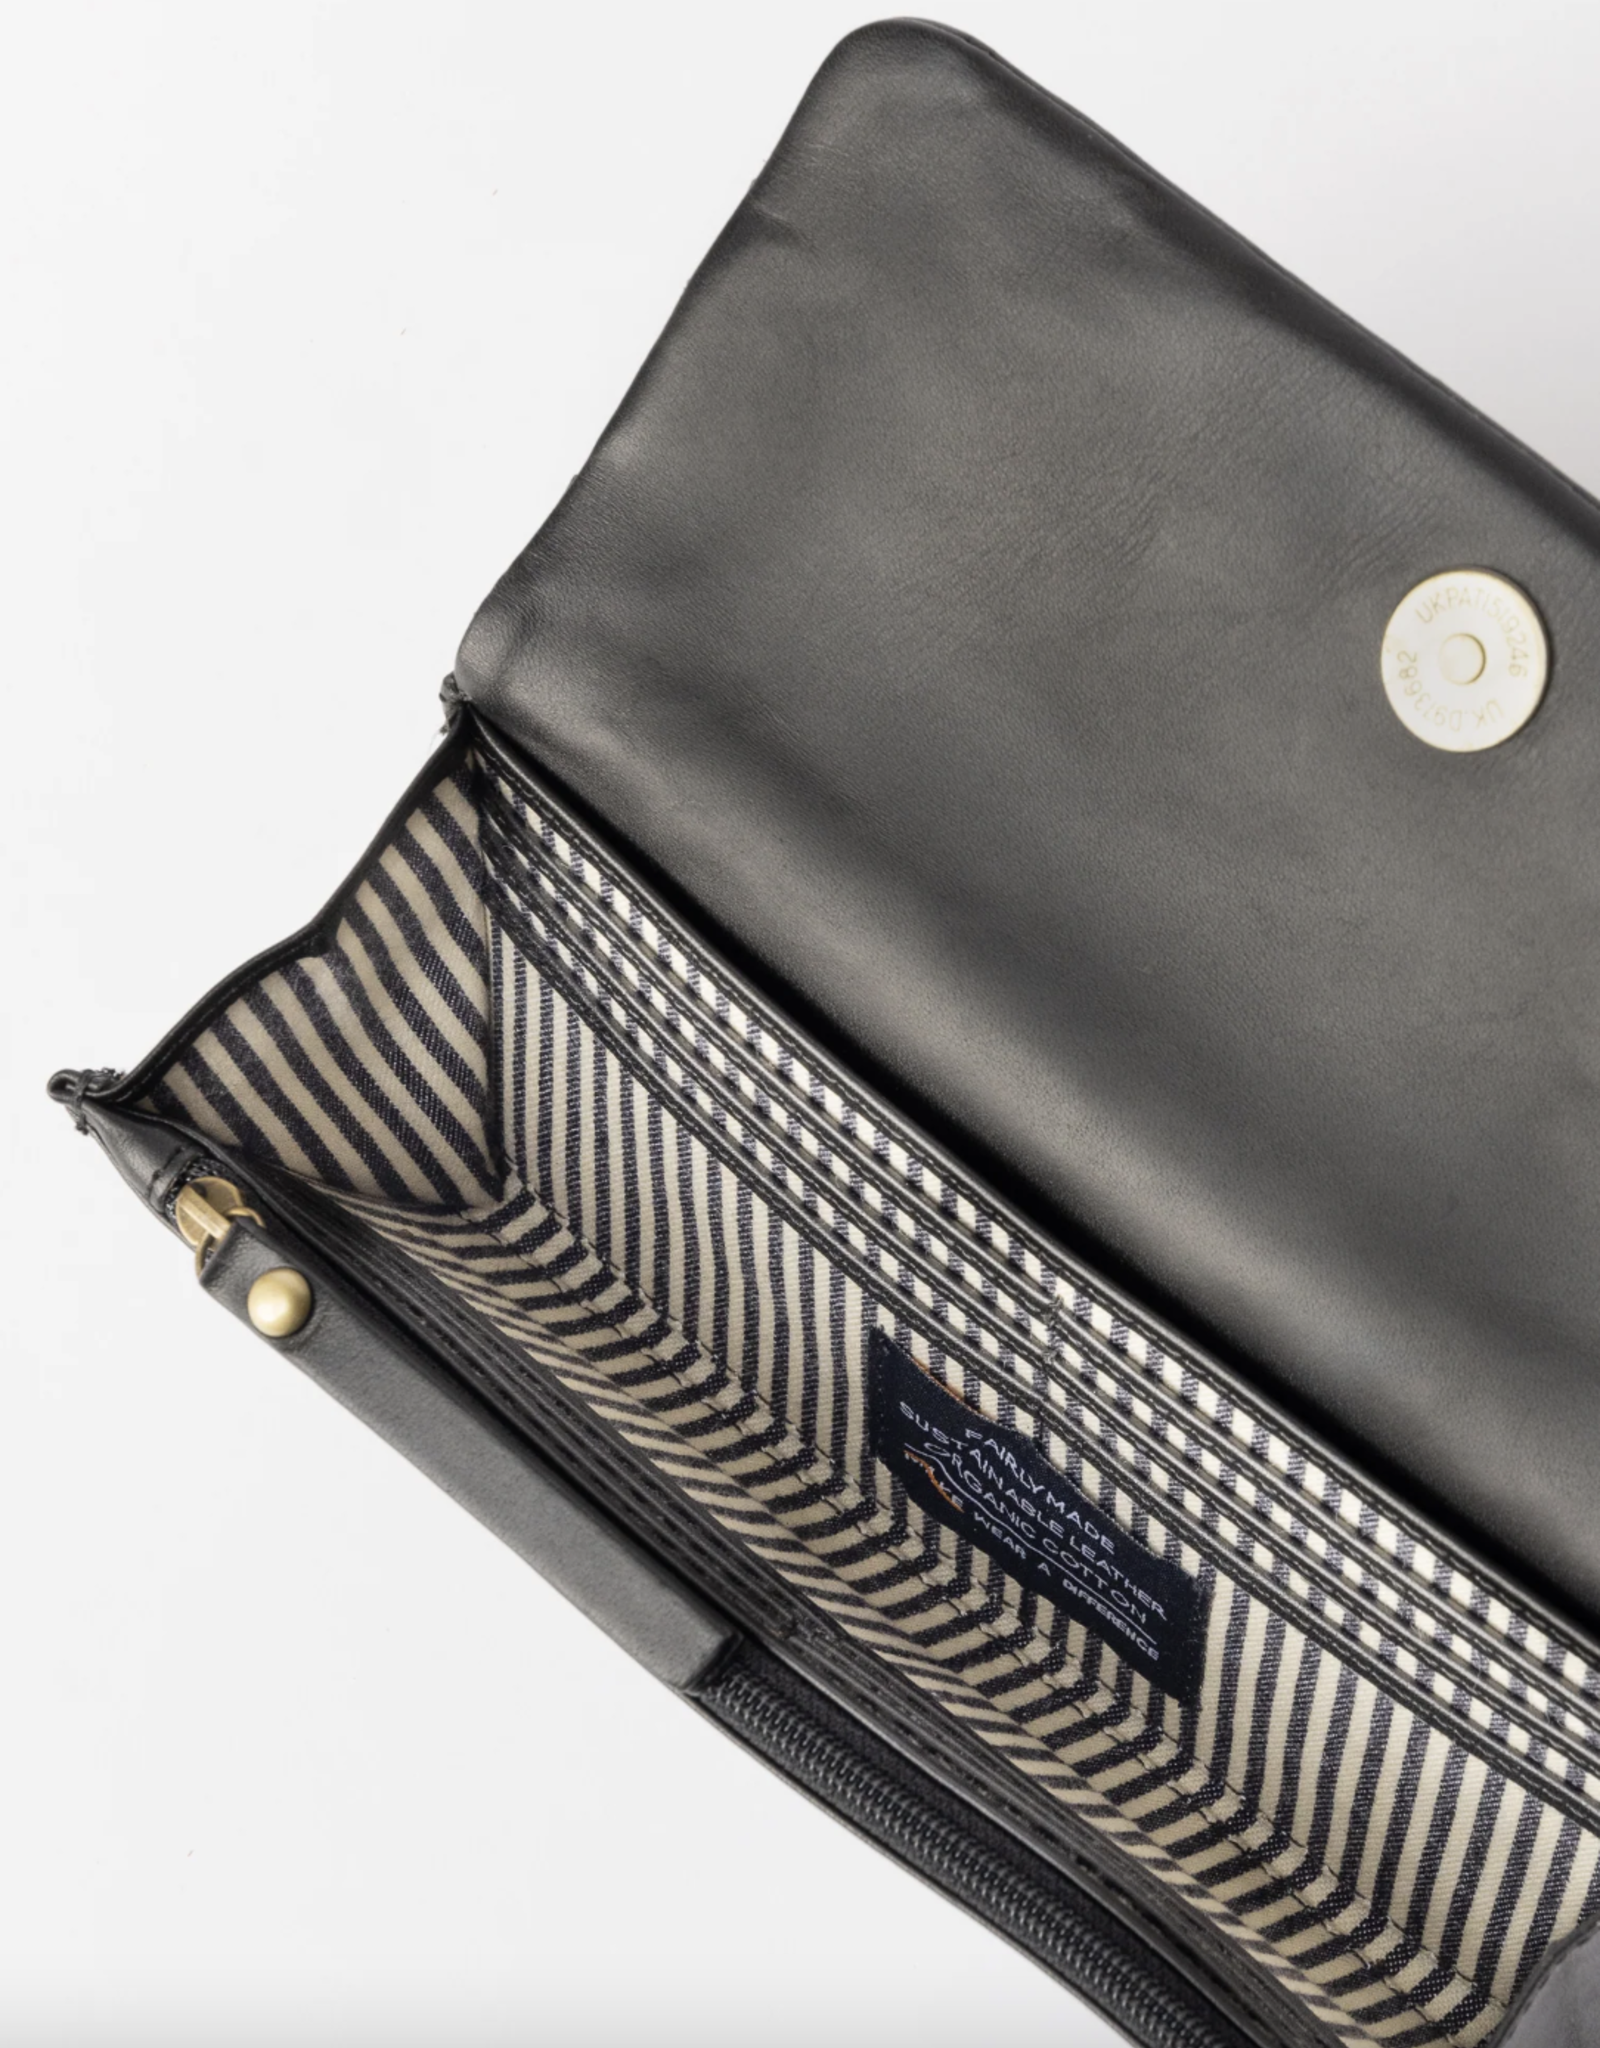 O My Bag Pau's pouch - black woven classic leather